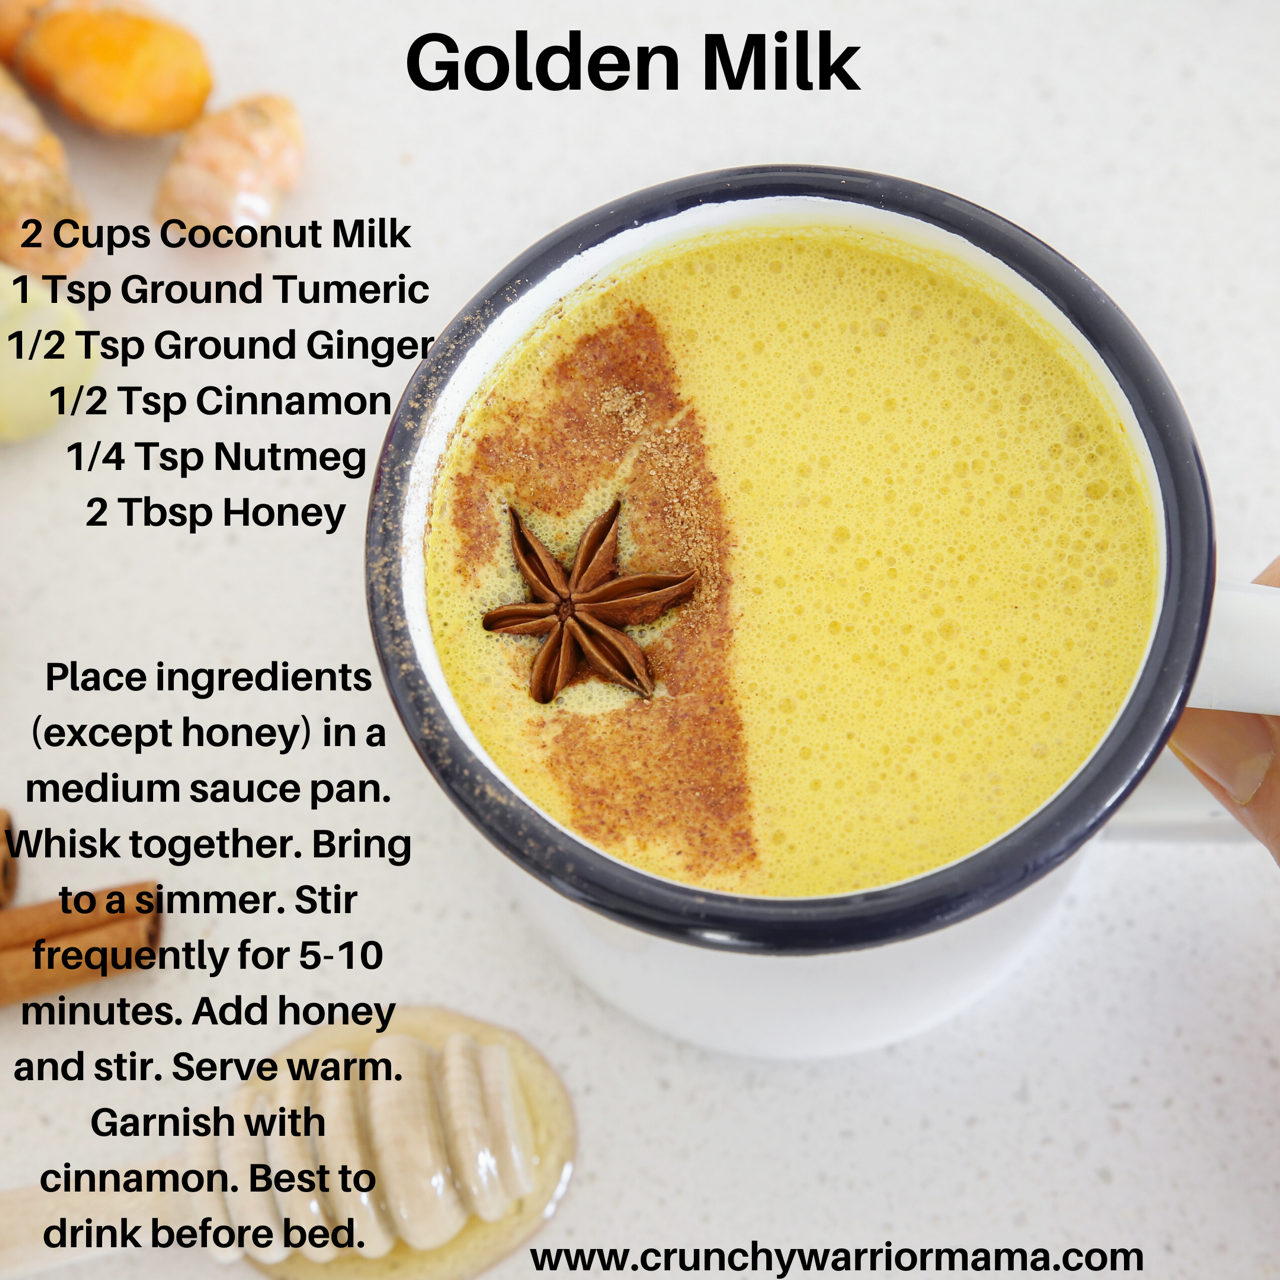 Golden Milk Recipe: How to Make Golden Milk Recipe at Home